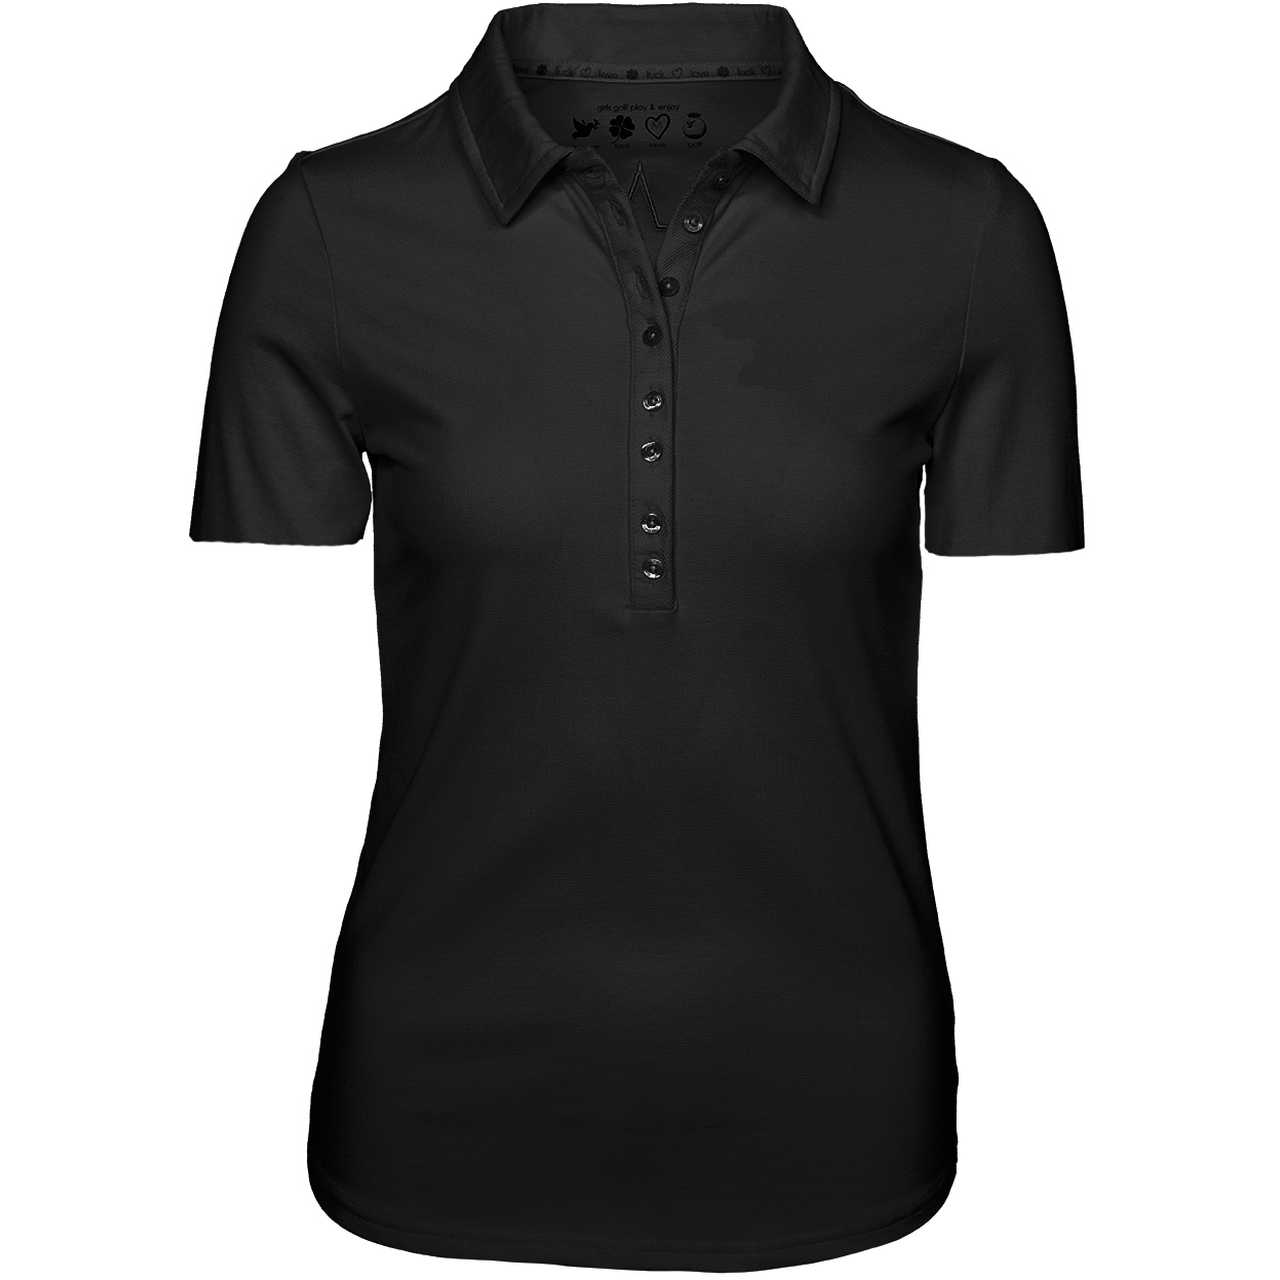 girls golf polo 'basic STAR
SOPHY' (black)